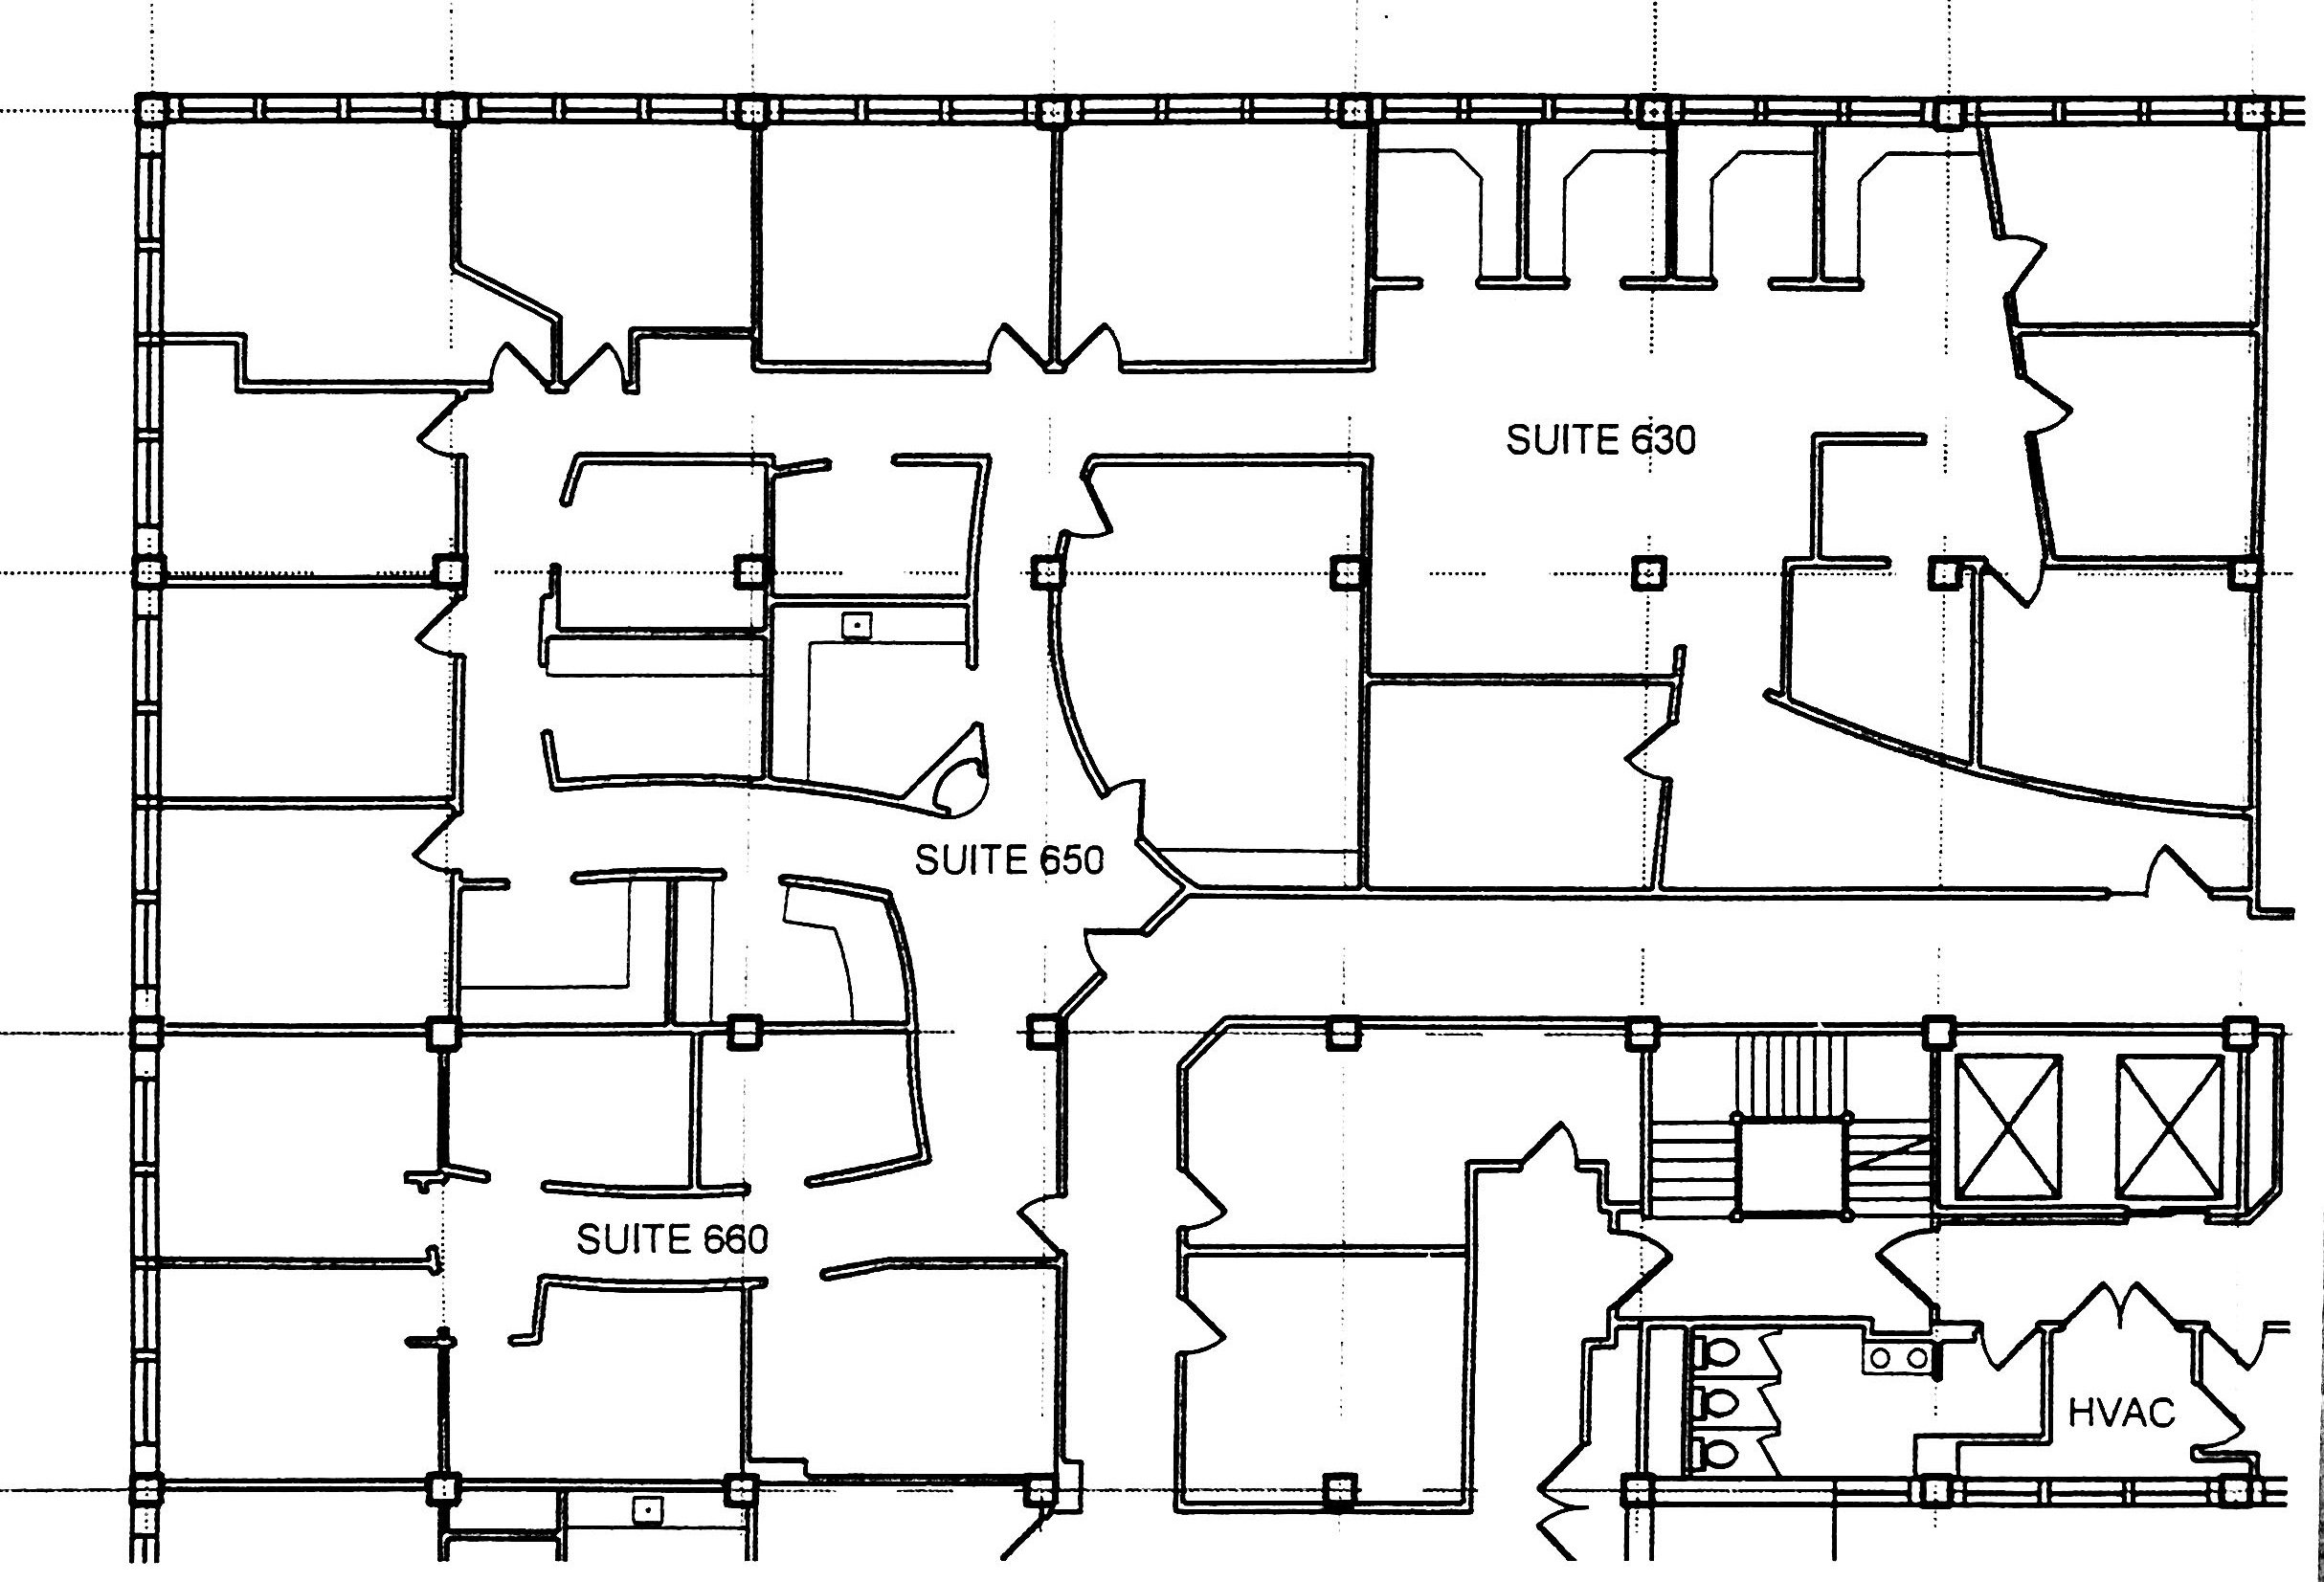 Suite 660 floor plan copy.jpg